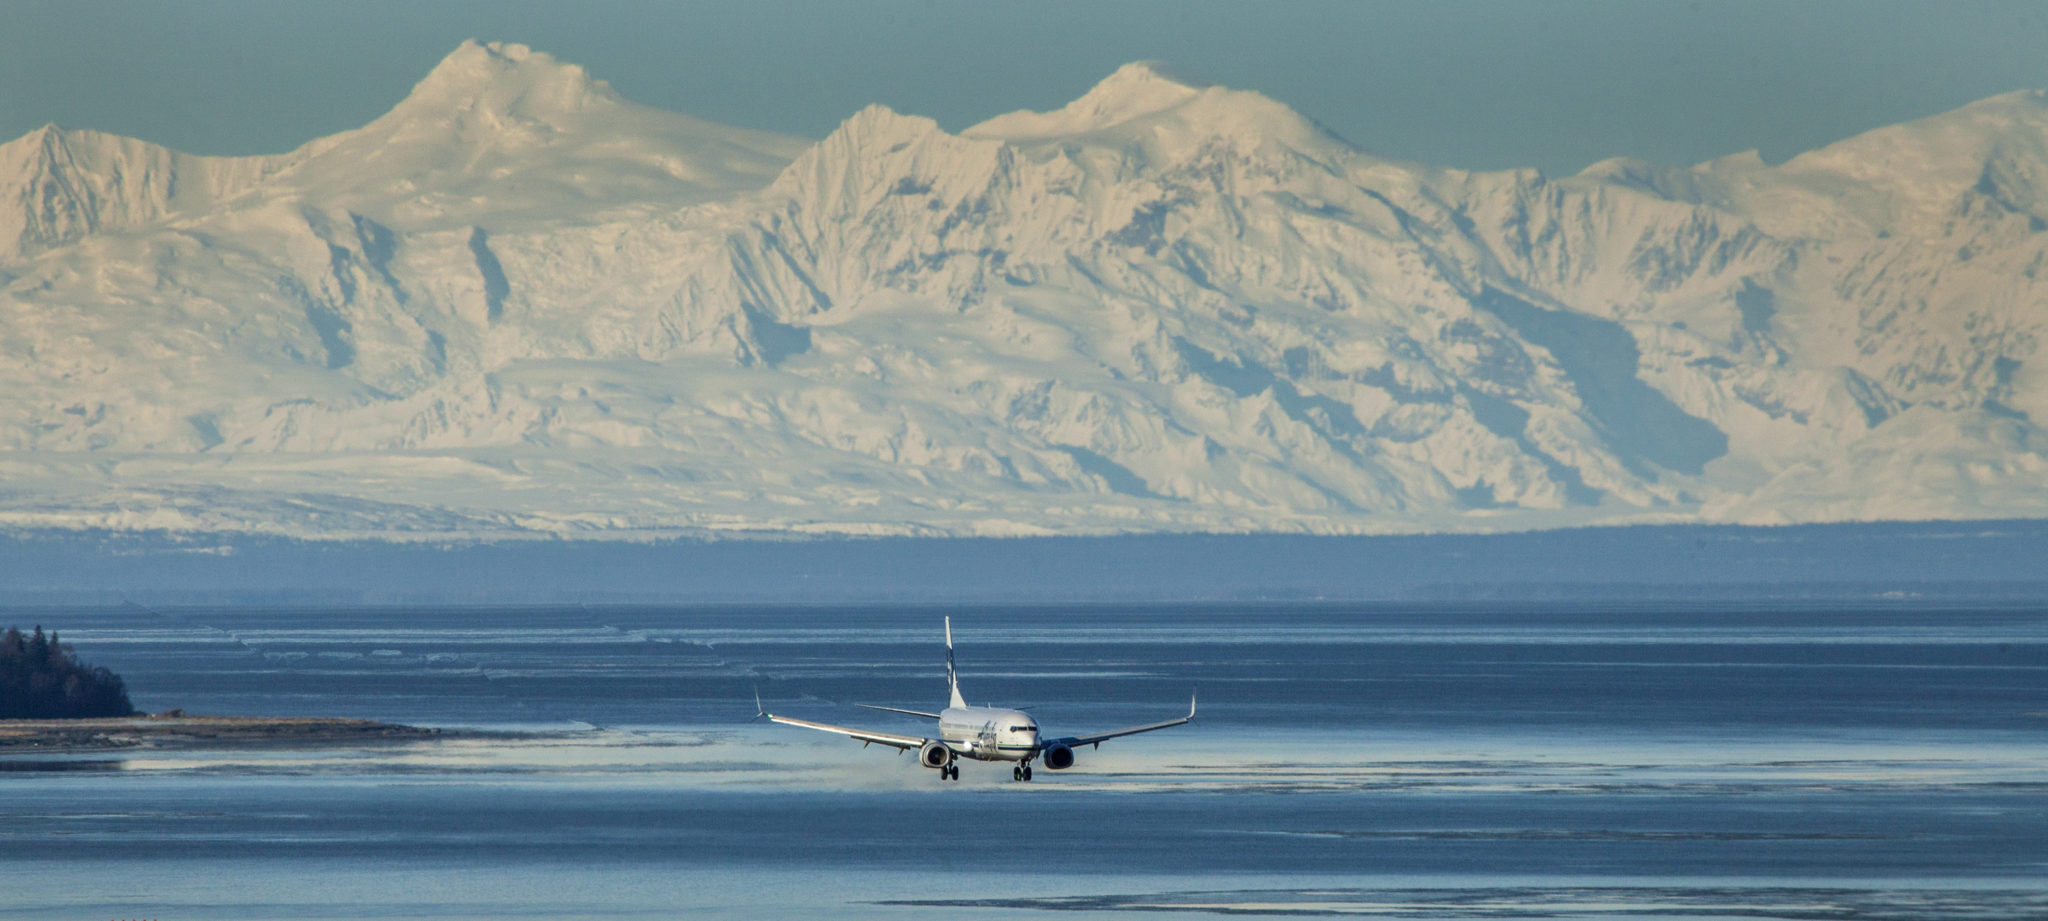 ASA Boeing 737 - Portrait of jet with great imagery | Alaskafoto - Alaska aircraft portraits